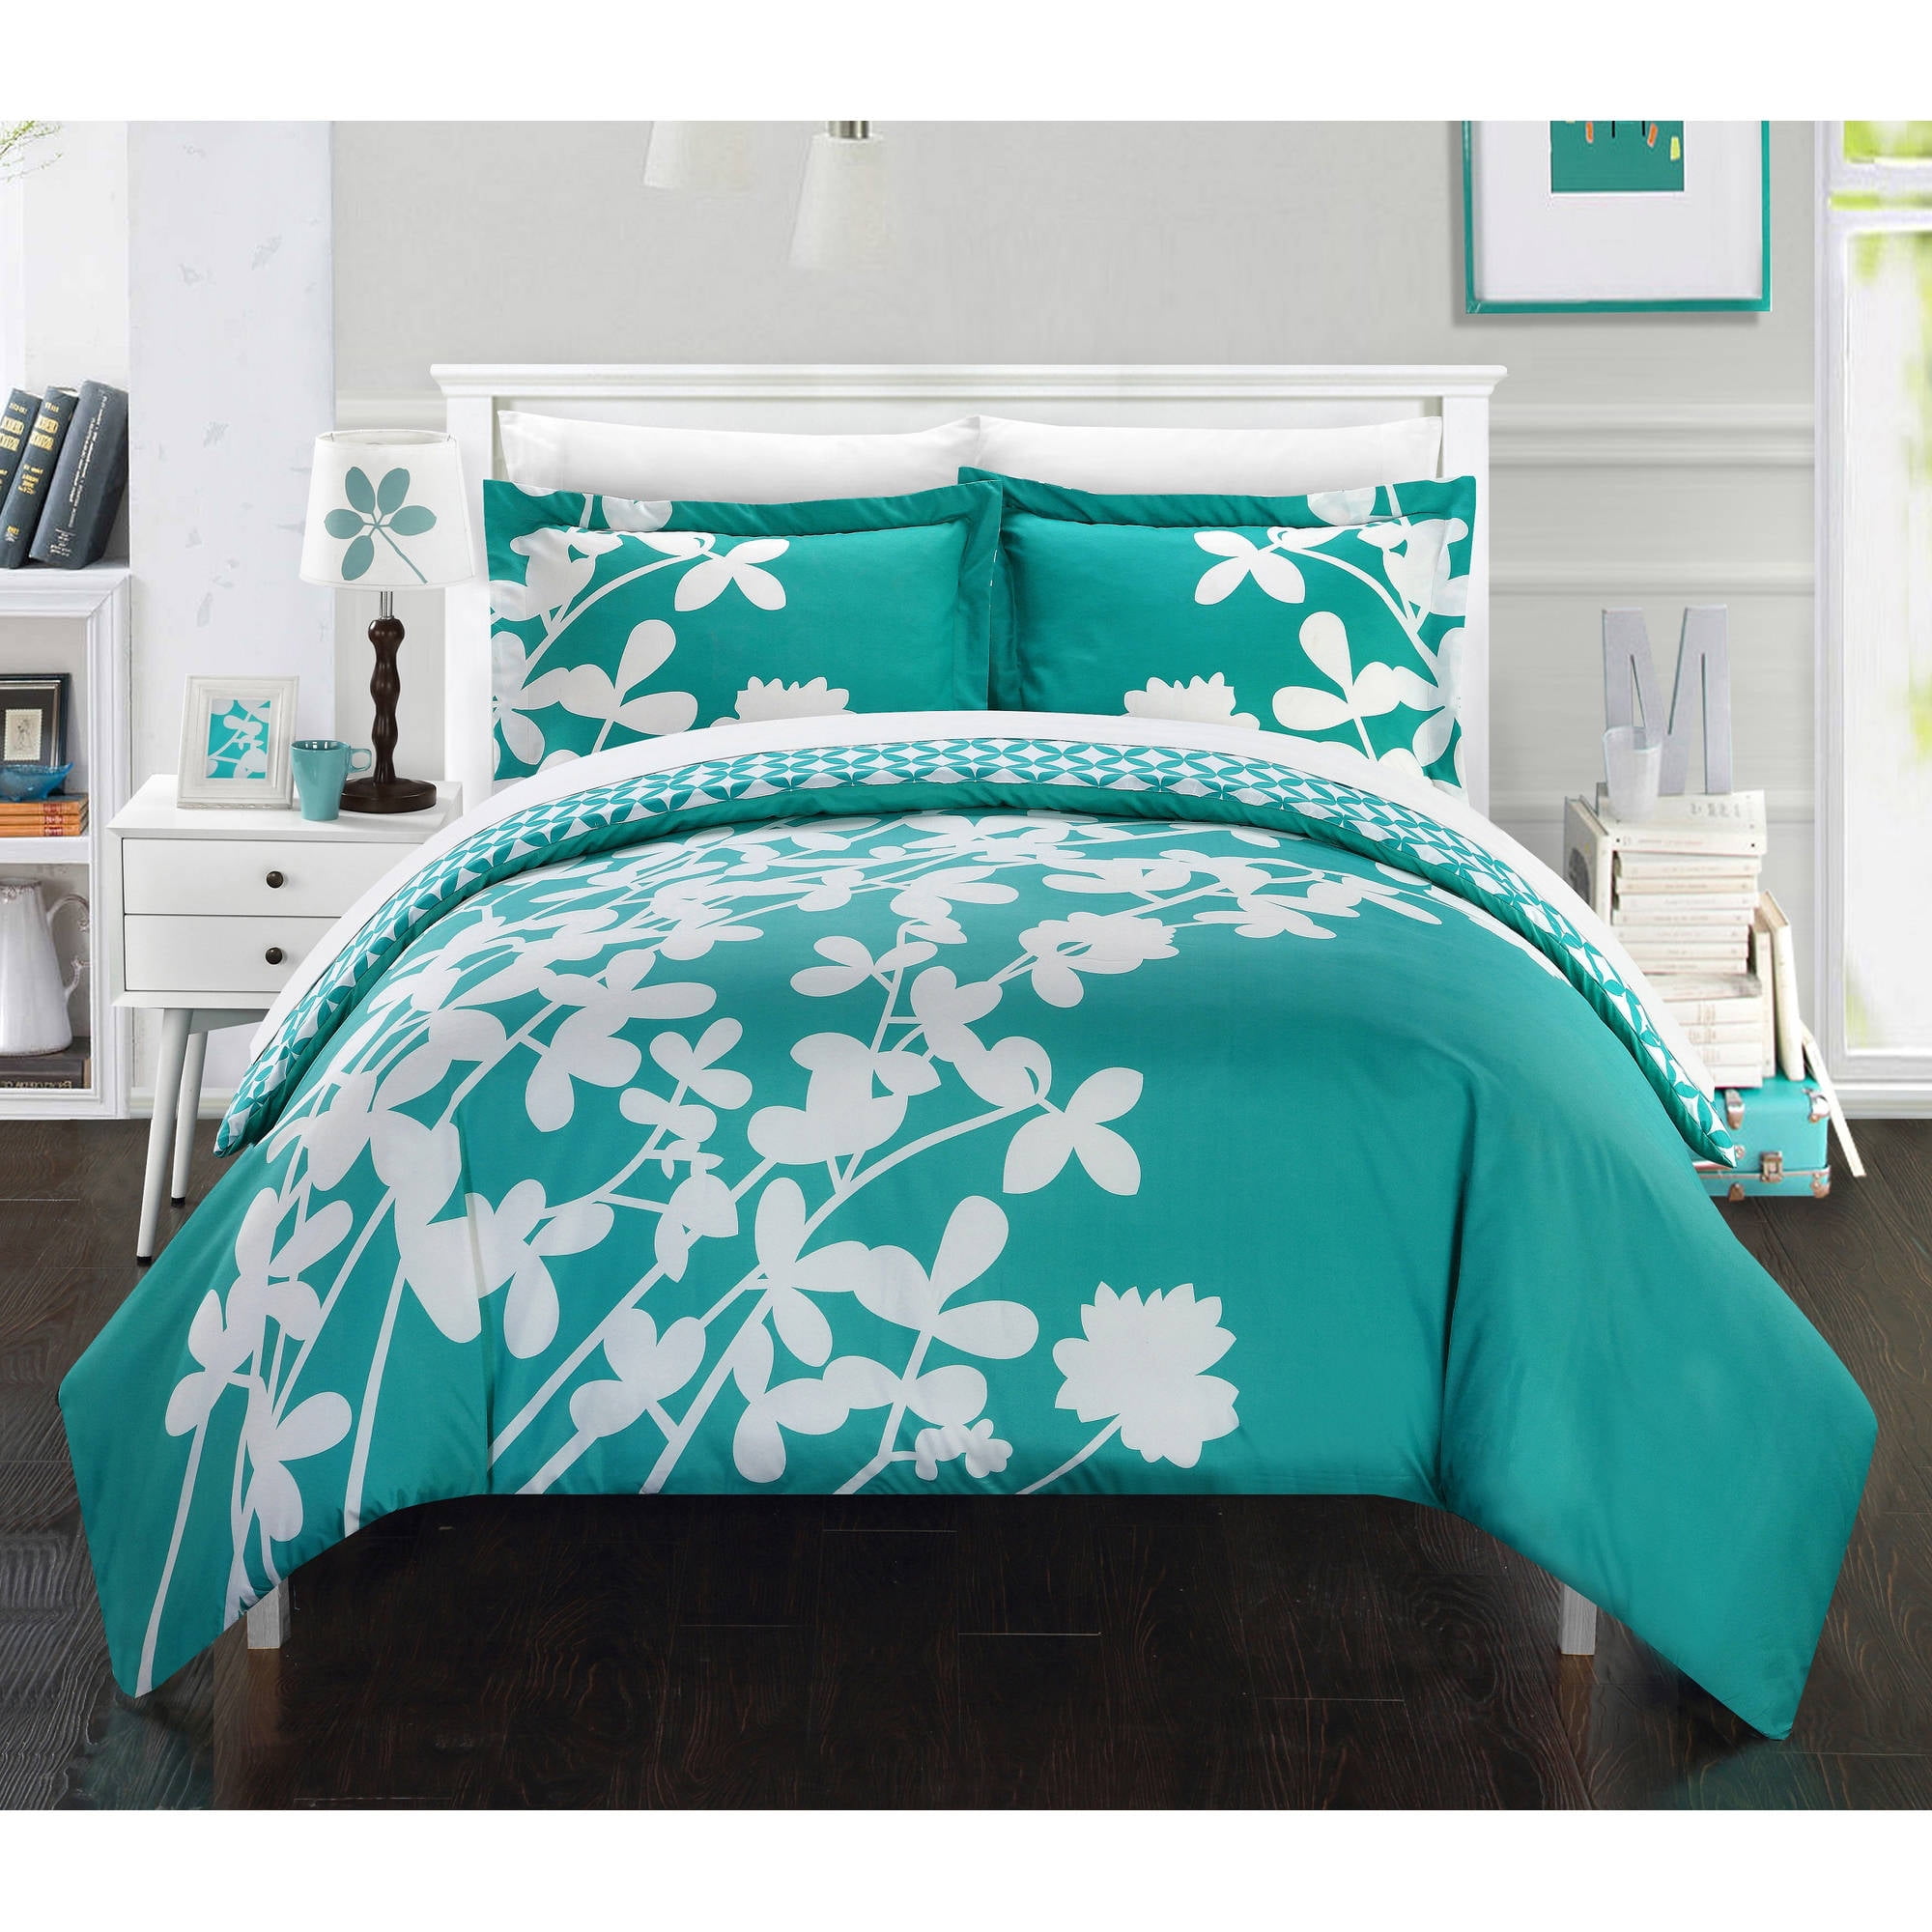 Casa Blanca 3 Piece Bedding Floral Duvet Cover Set King Blue